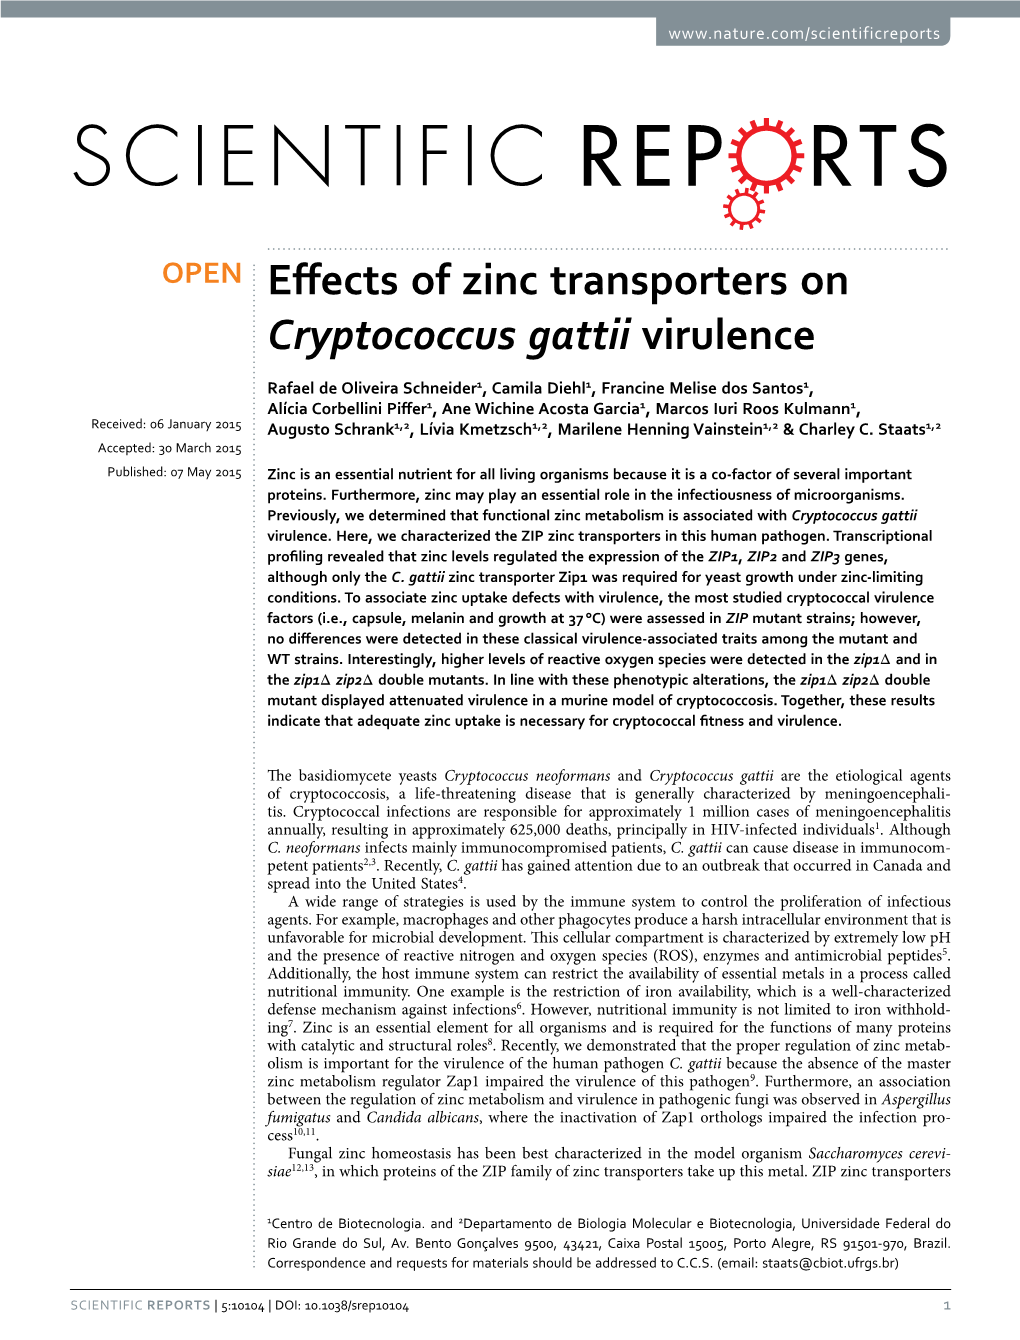 Effects of Zinc Transporters on Cryptococcus Gattii Virulence